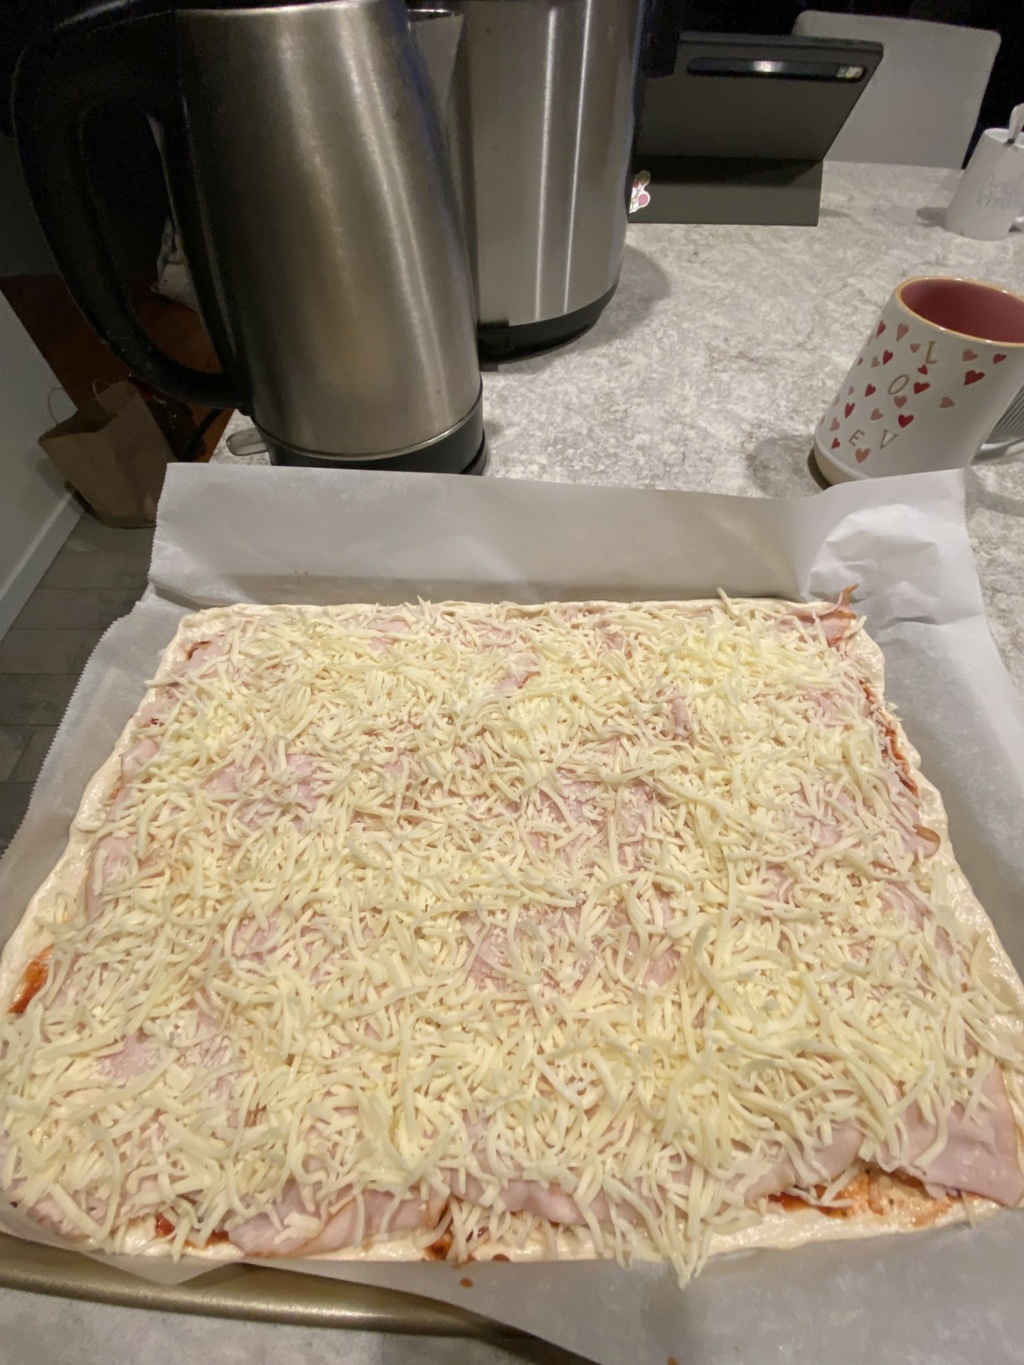 homemade pizza 176